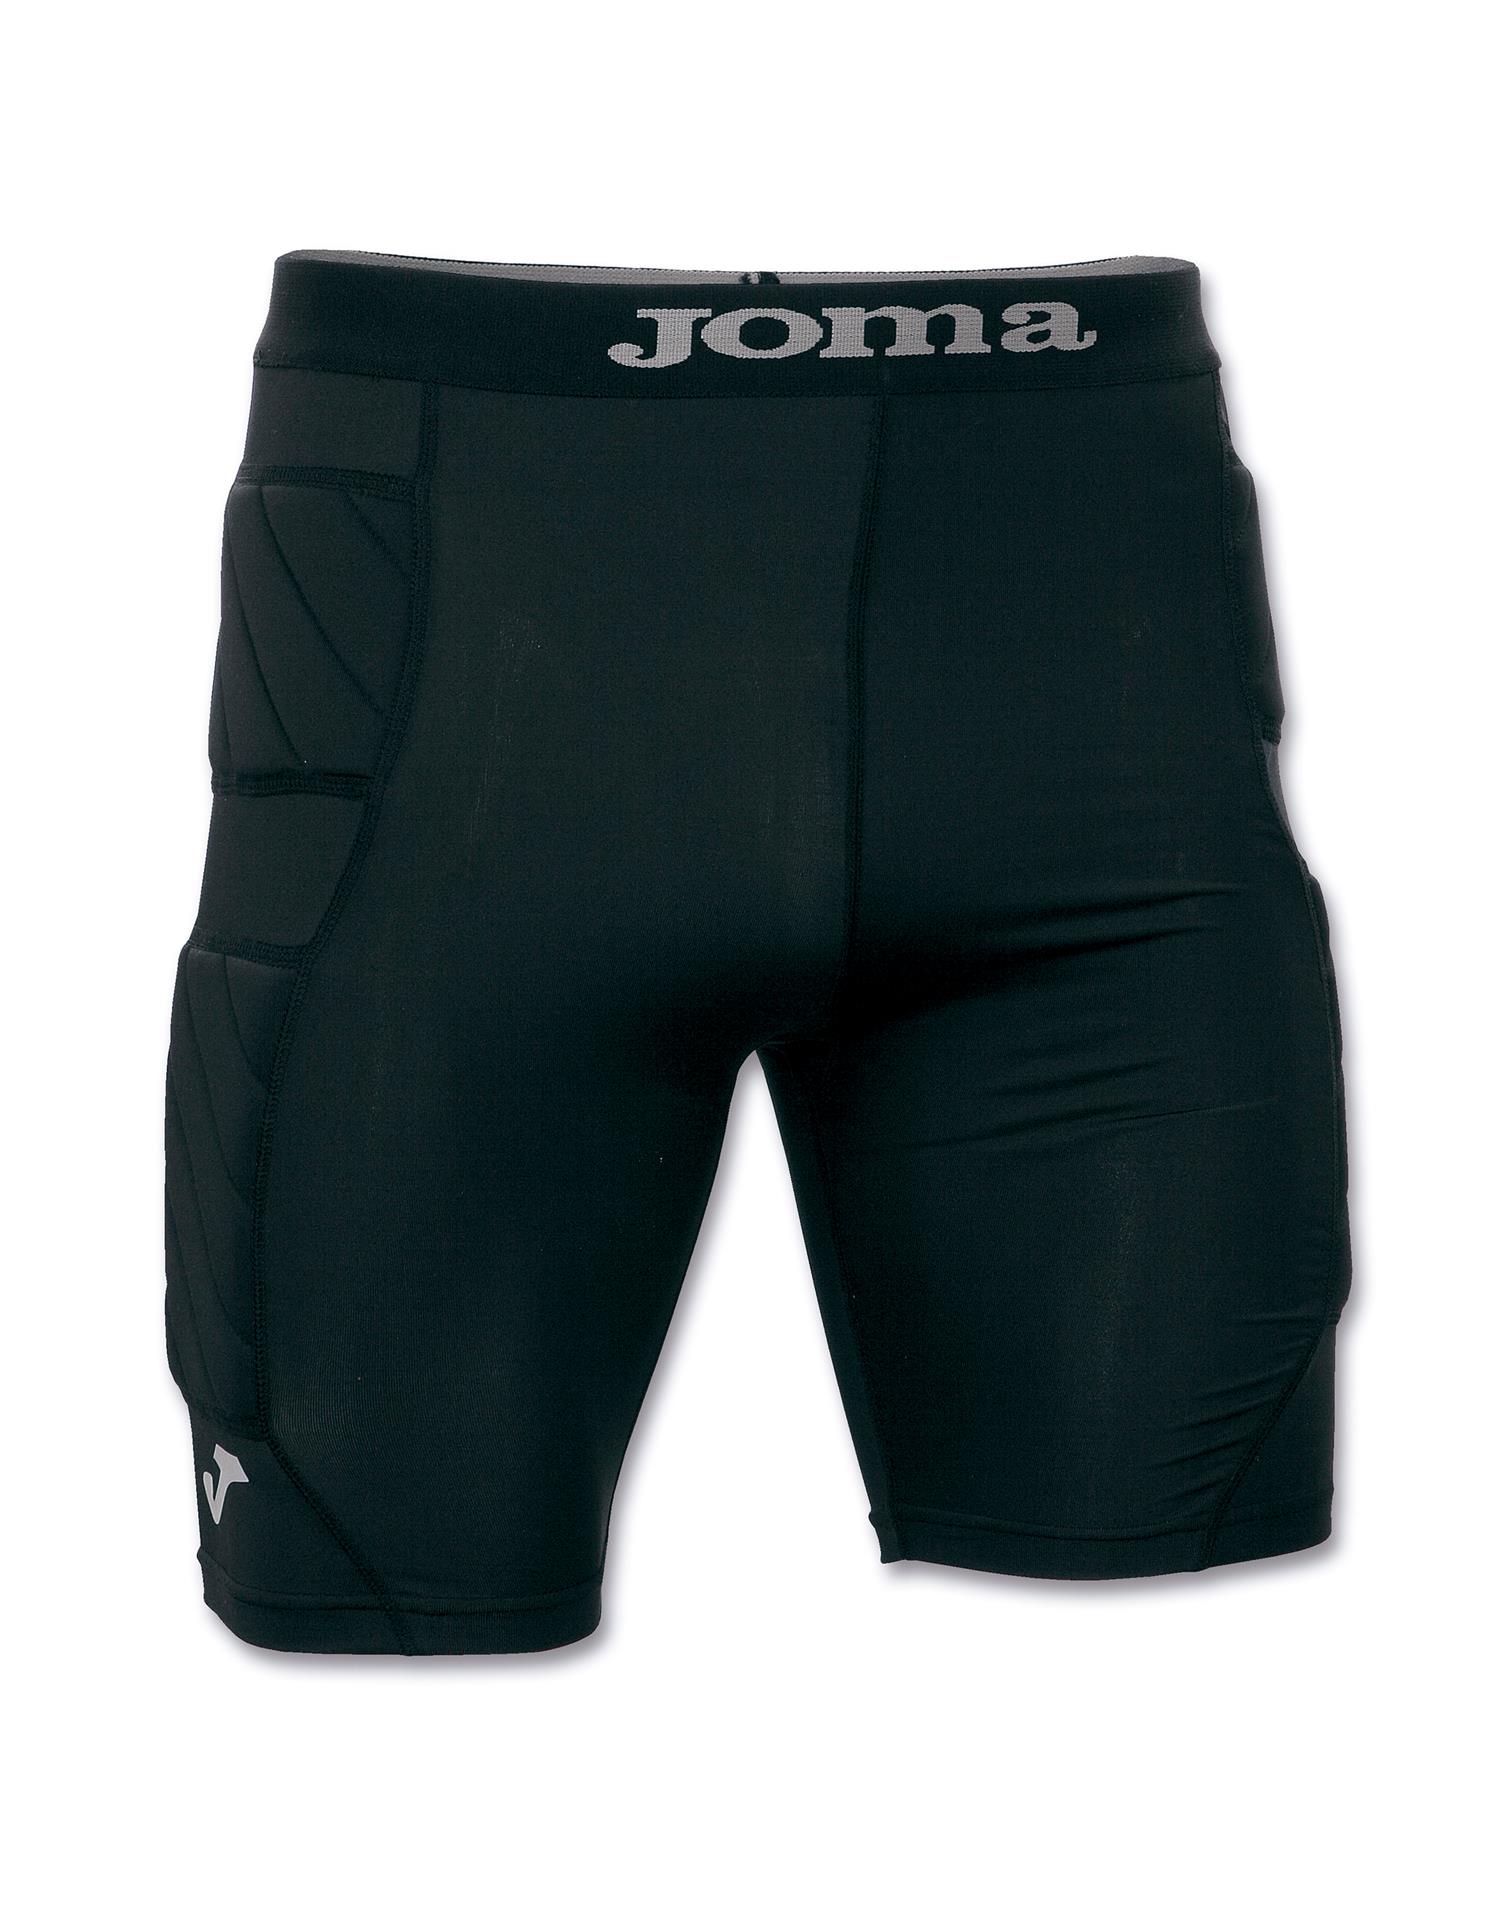 JOMA Pantalone portiere protec short